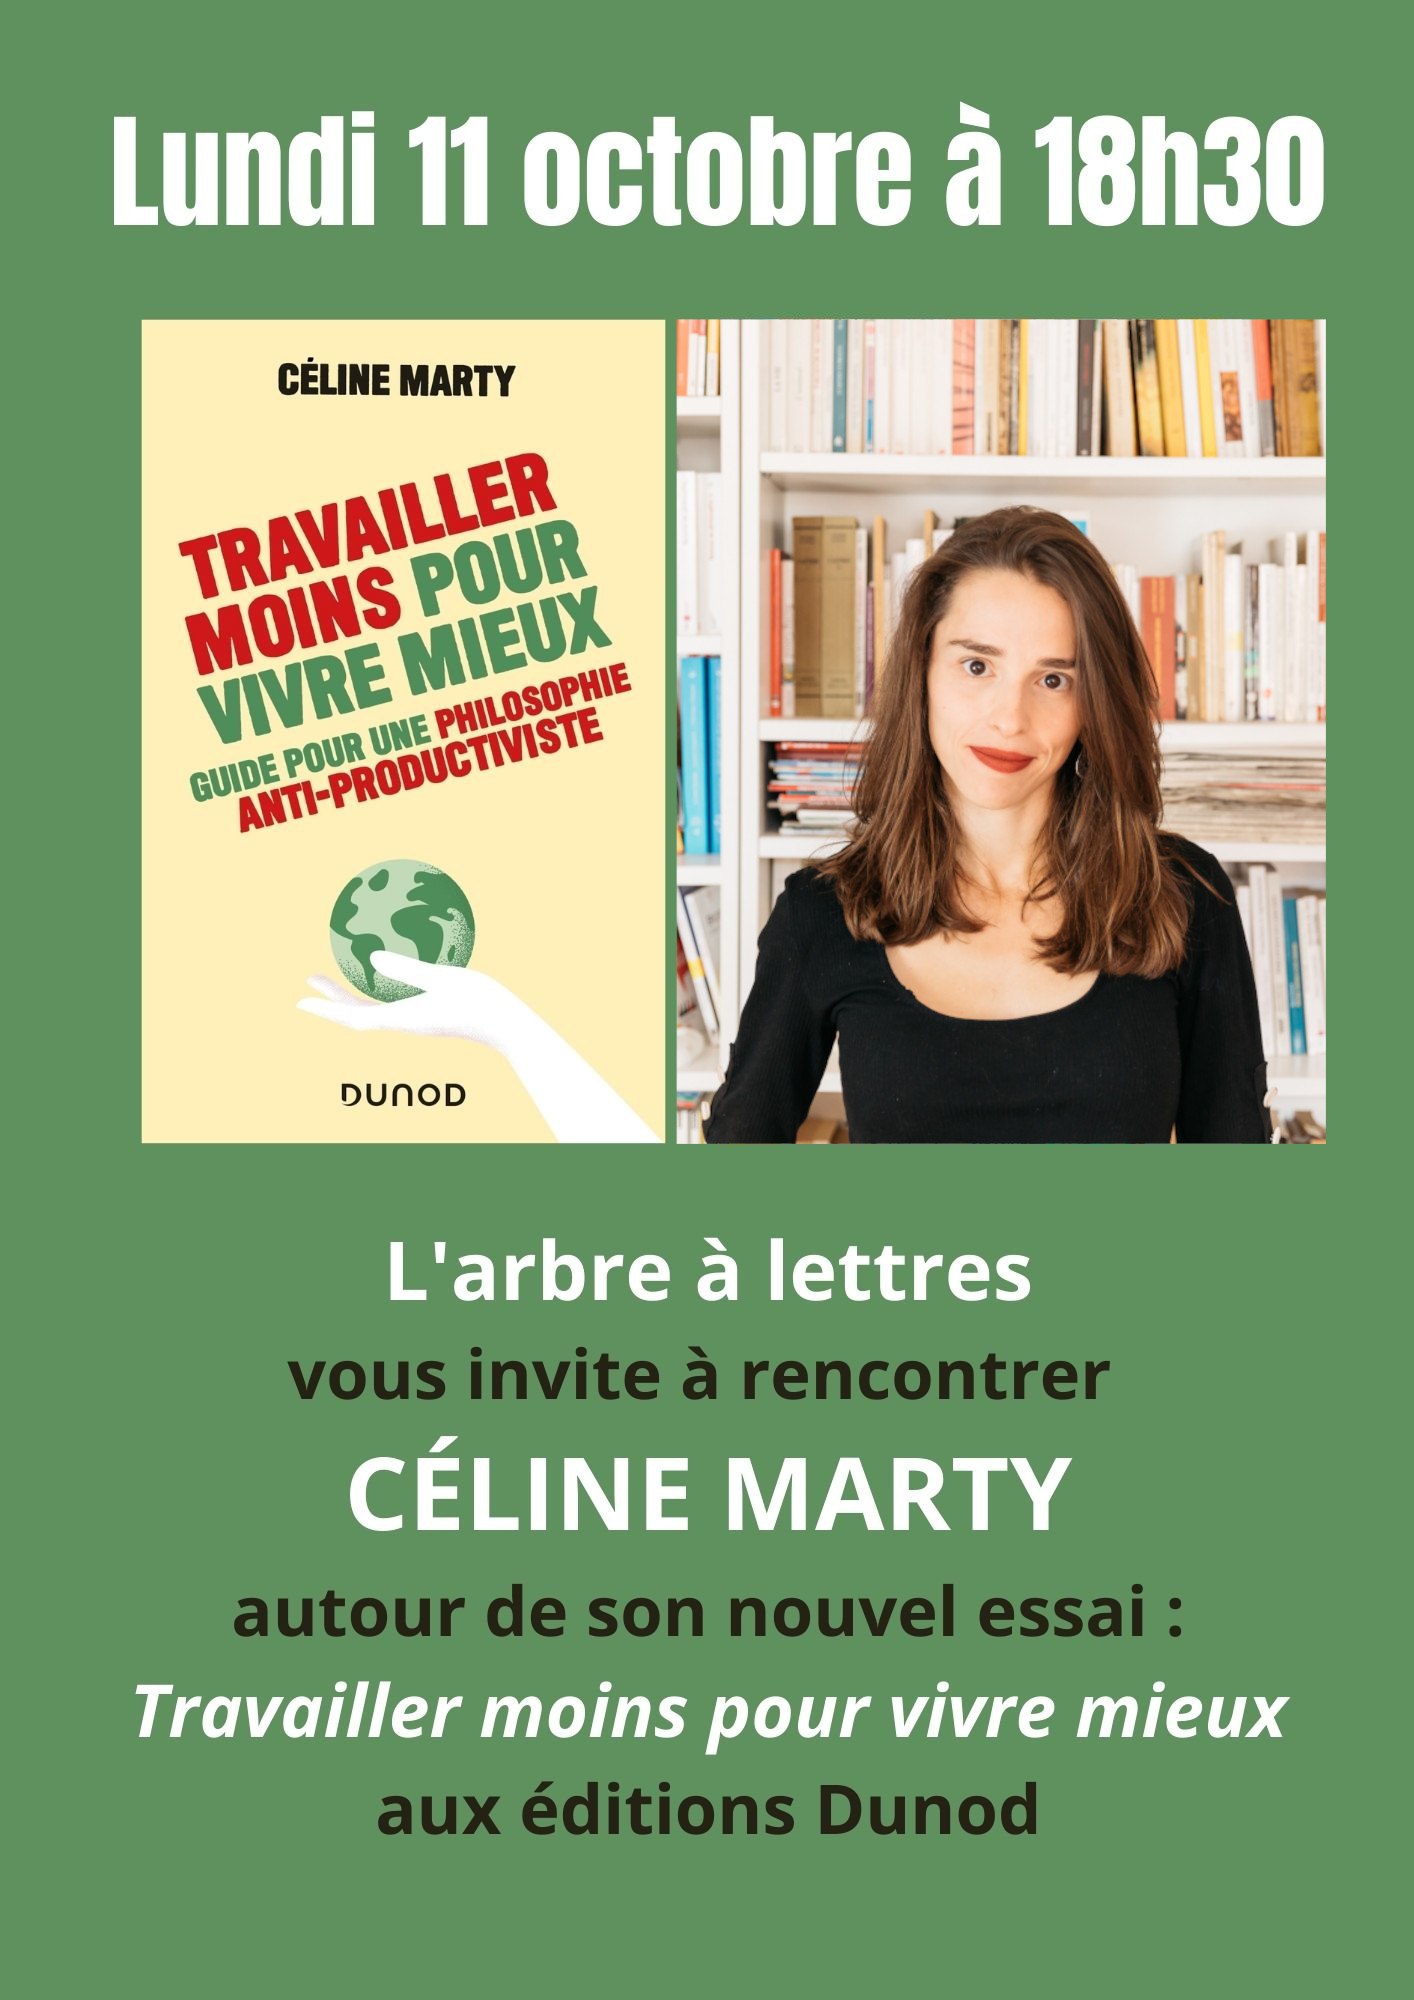 Ici Librairie - Rencontre avec Ariane Chemin